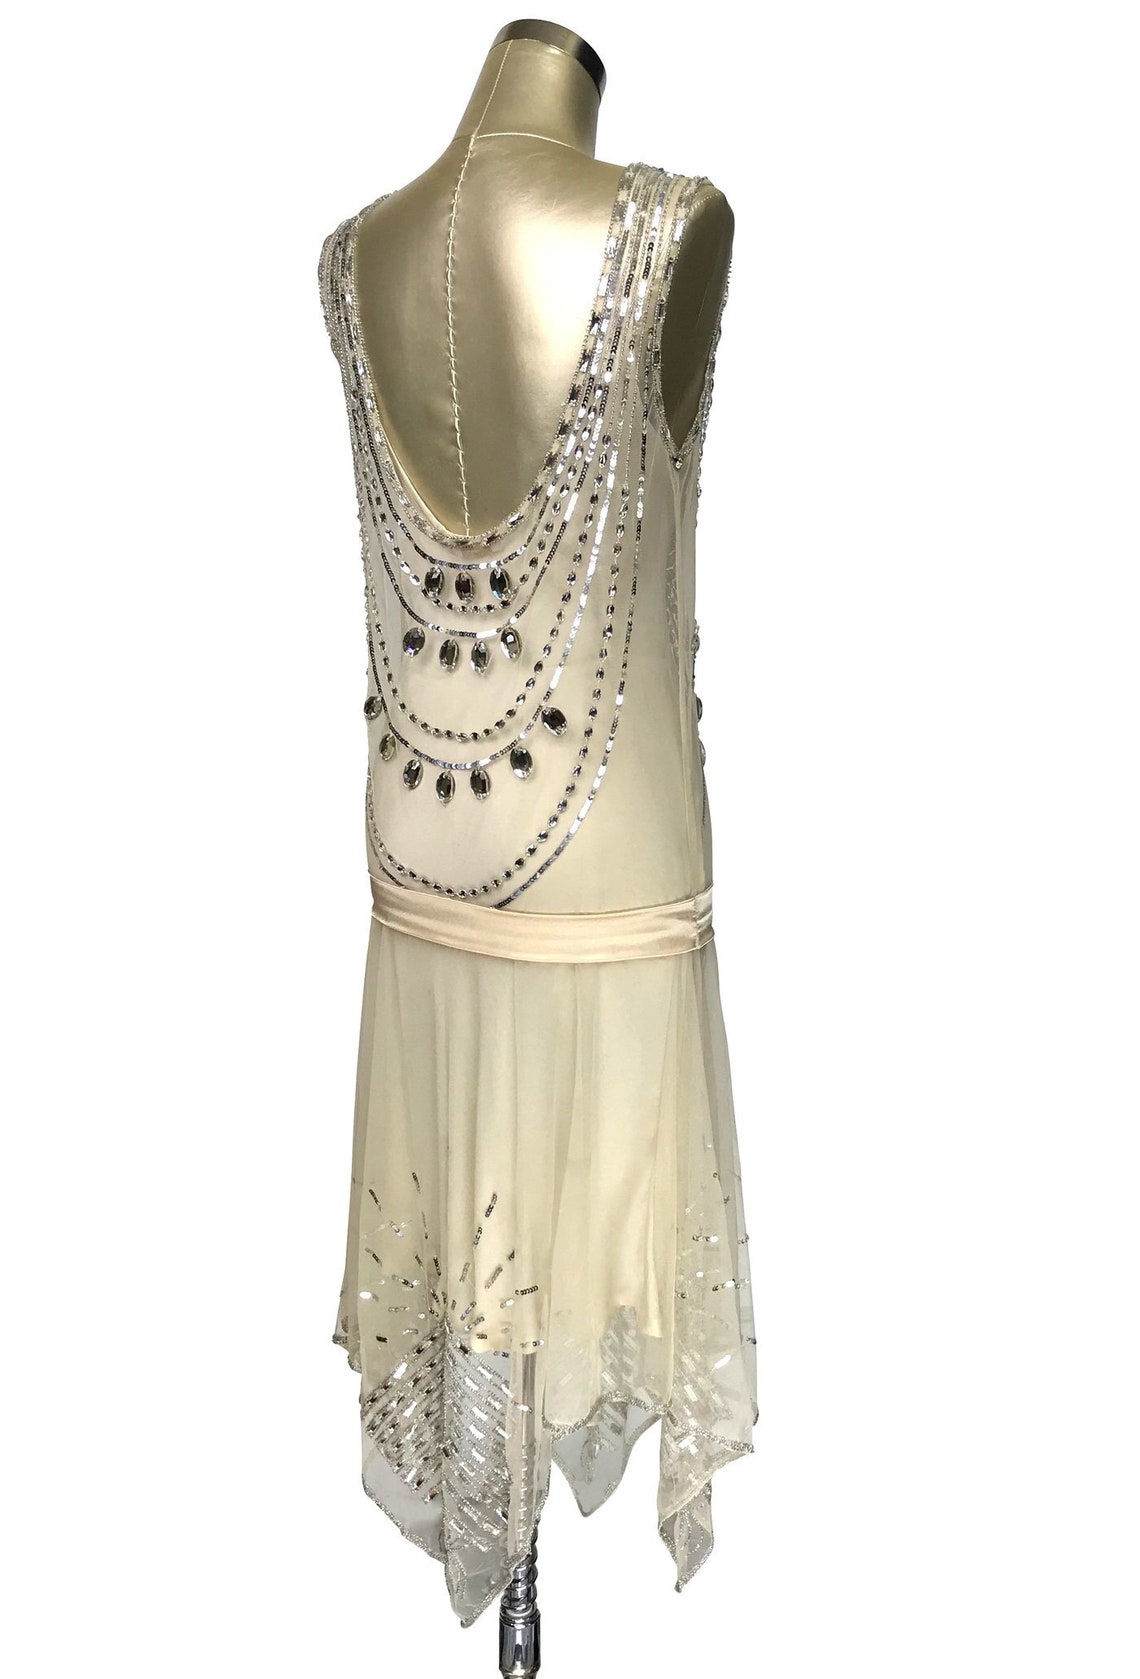 Ivory 1920's Beaded Wedding Dress Vintage Flapperthe - Etsy